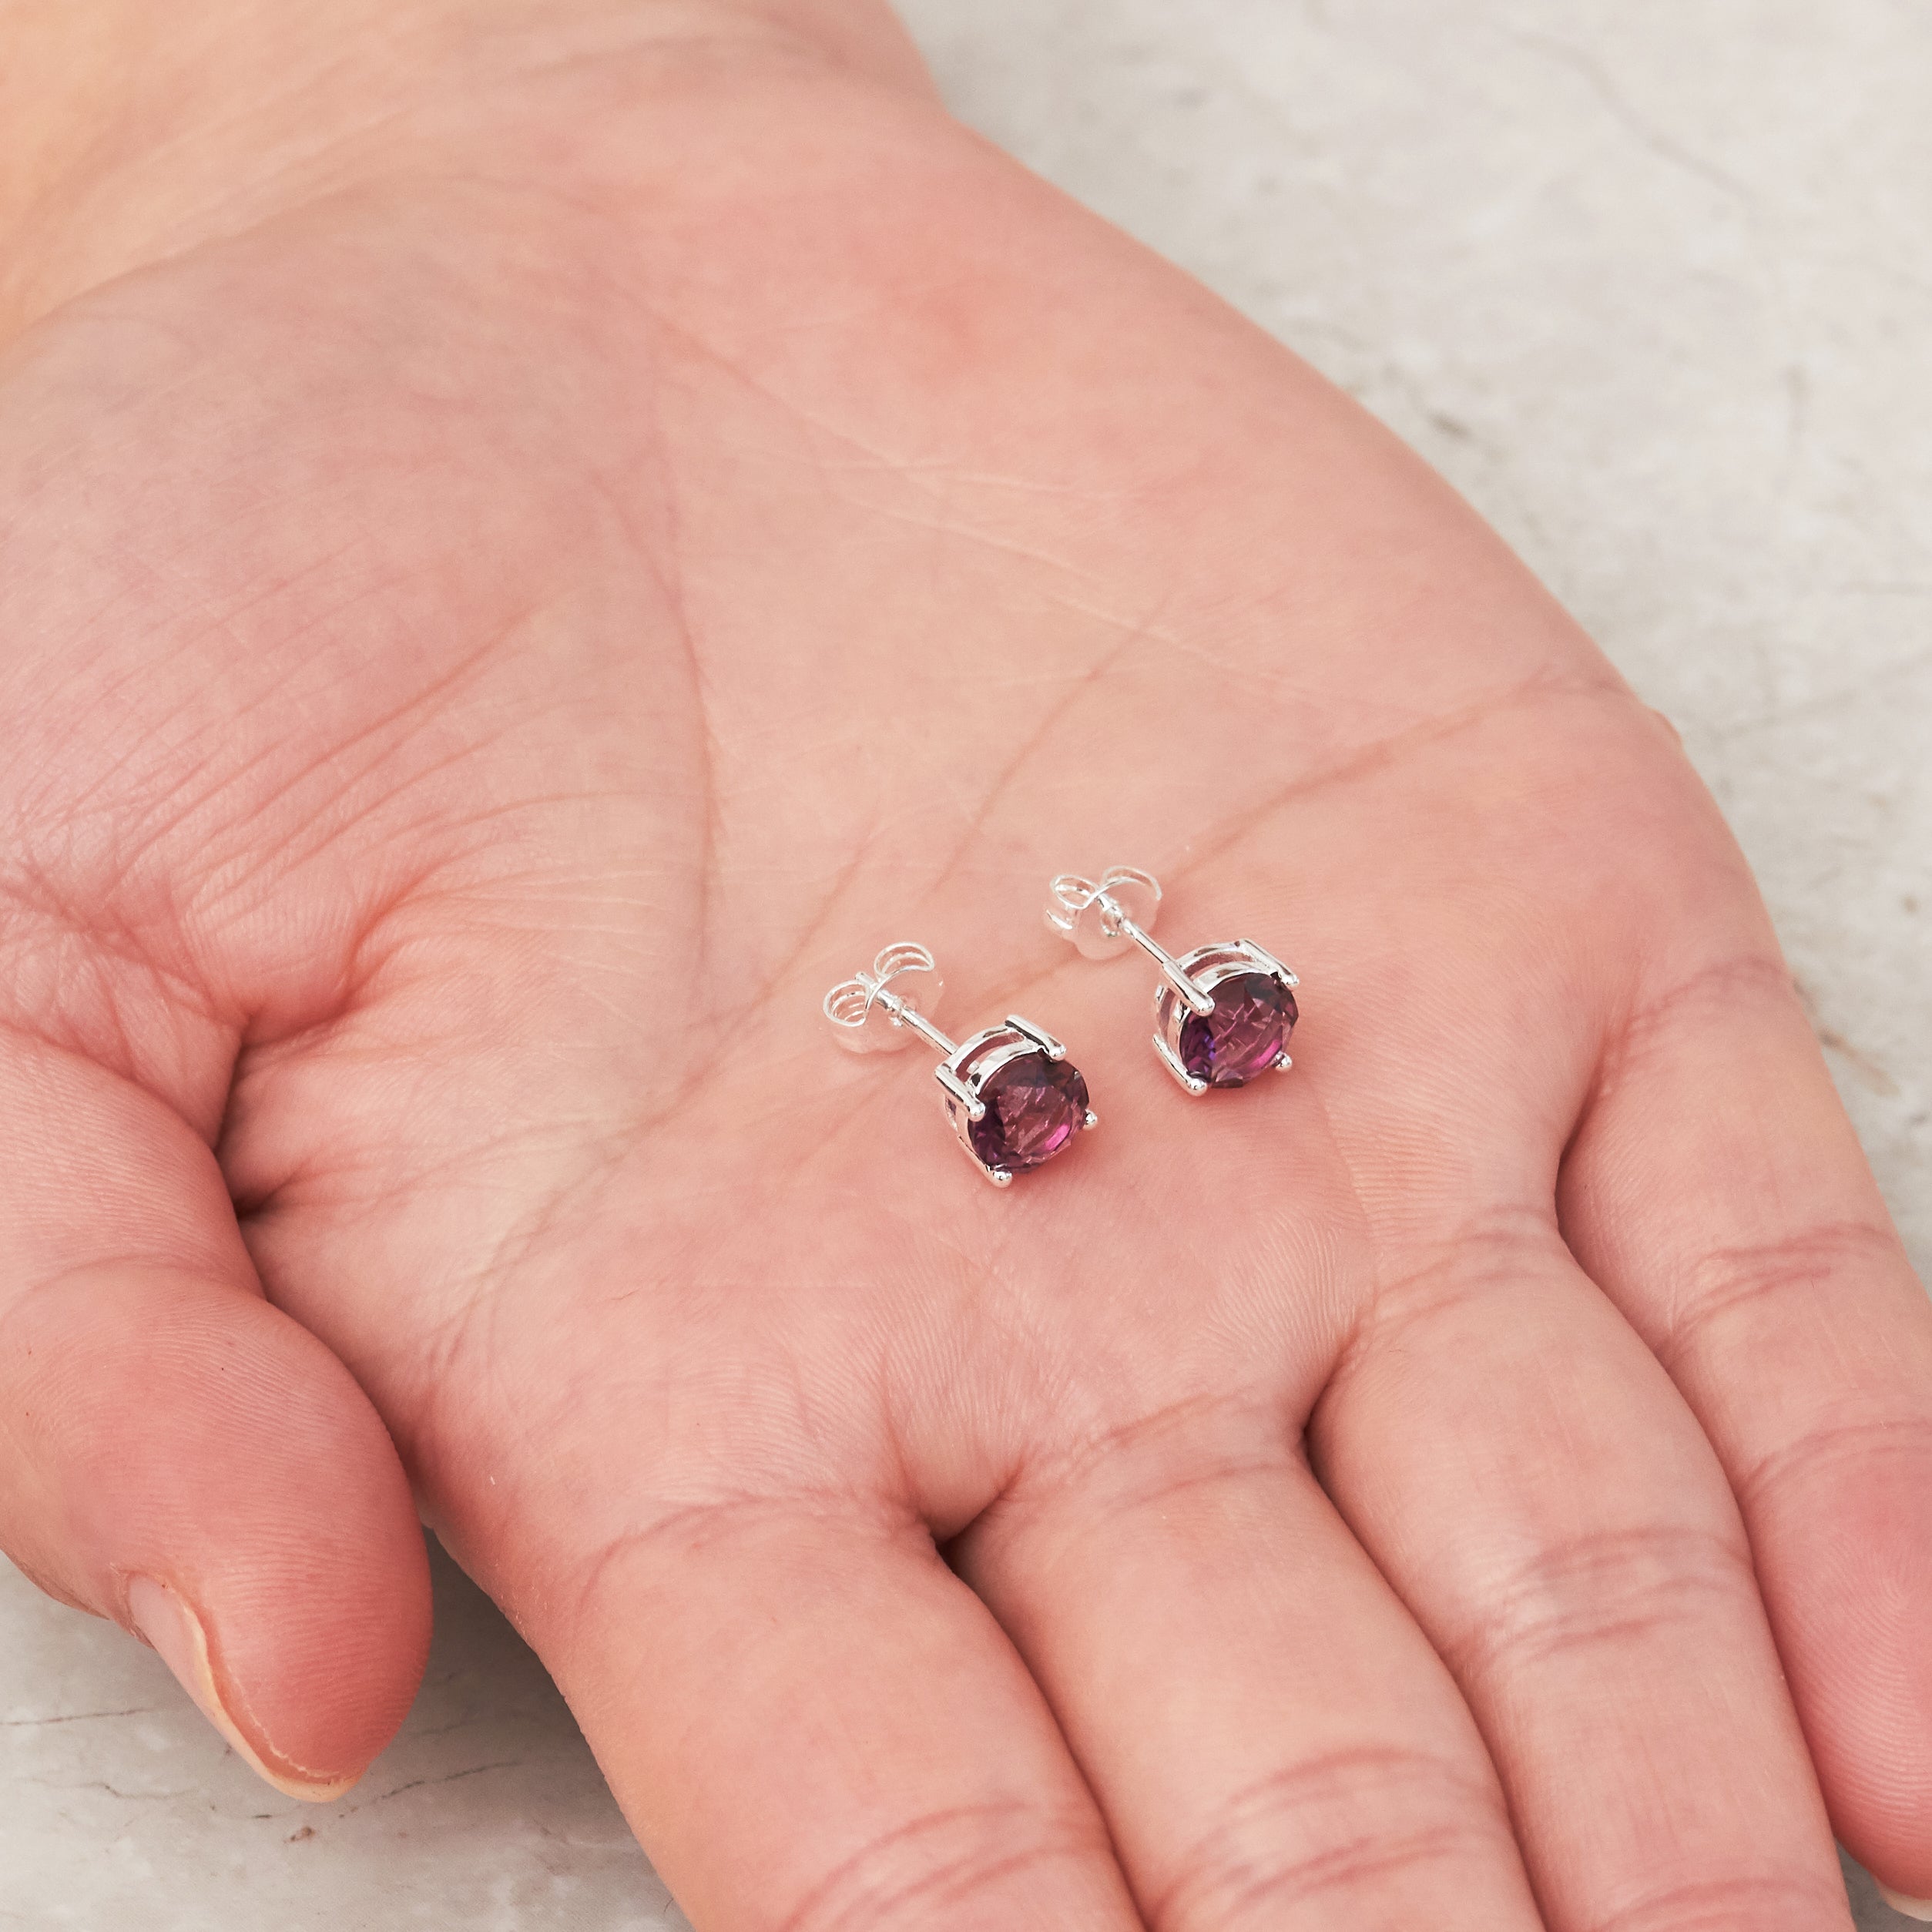 June (Alexandrite) Birthstone Earrings Created with Zircondia® Crystals